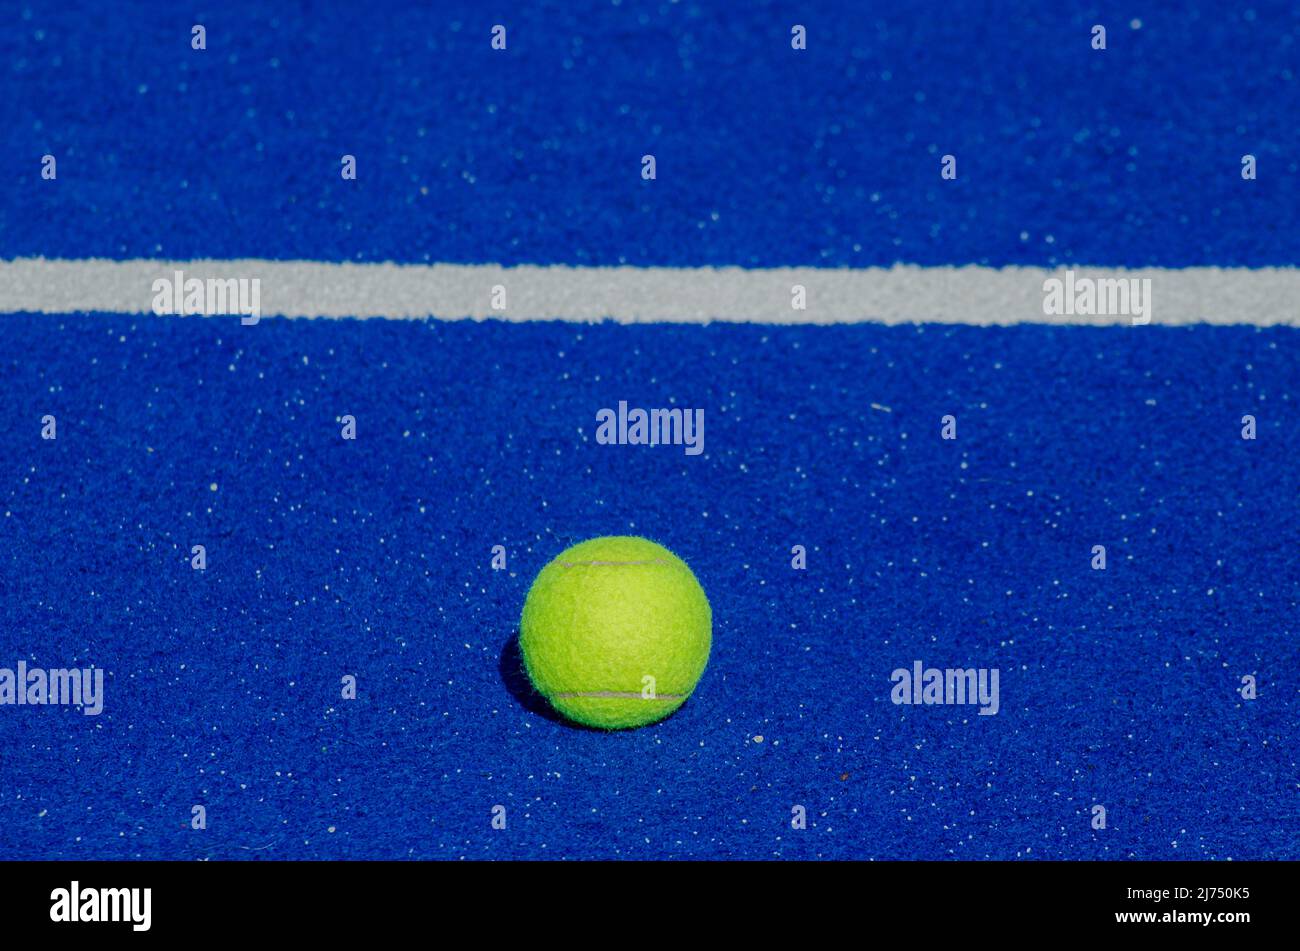 pista de tenis blue paddle, una sola pelota cerca de la línea de base Foto de stock